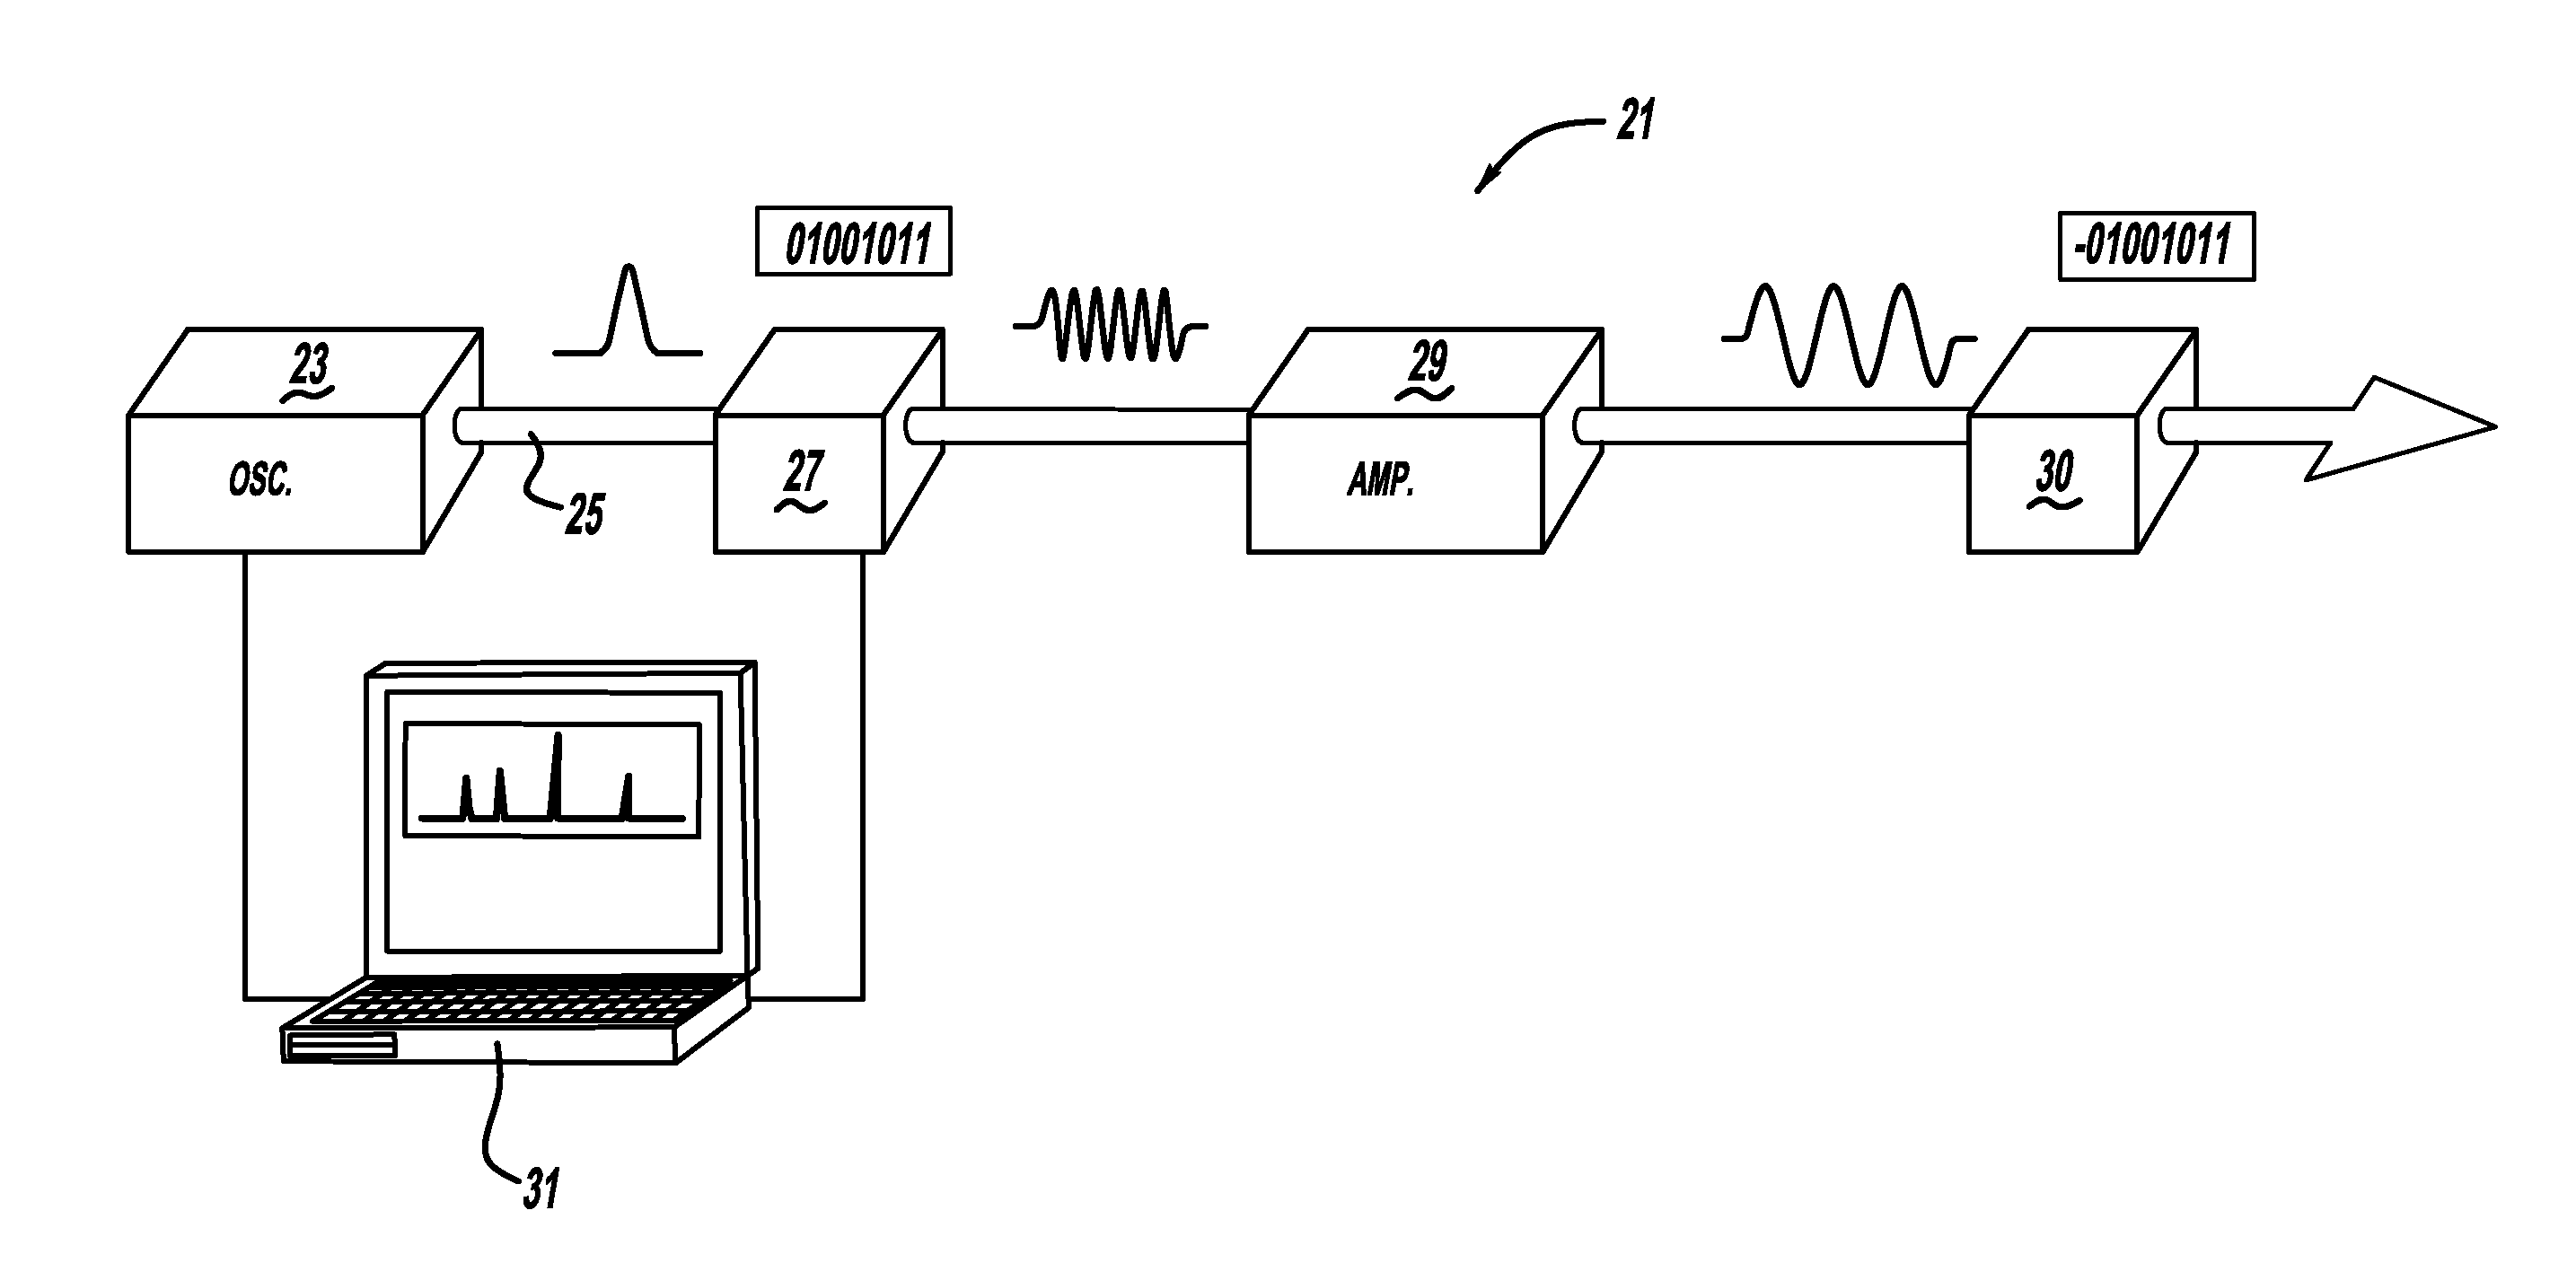 Laser amplification system